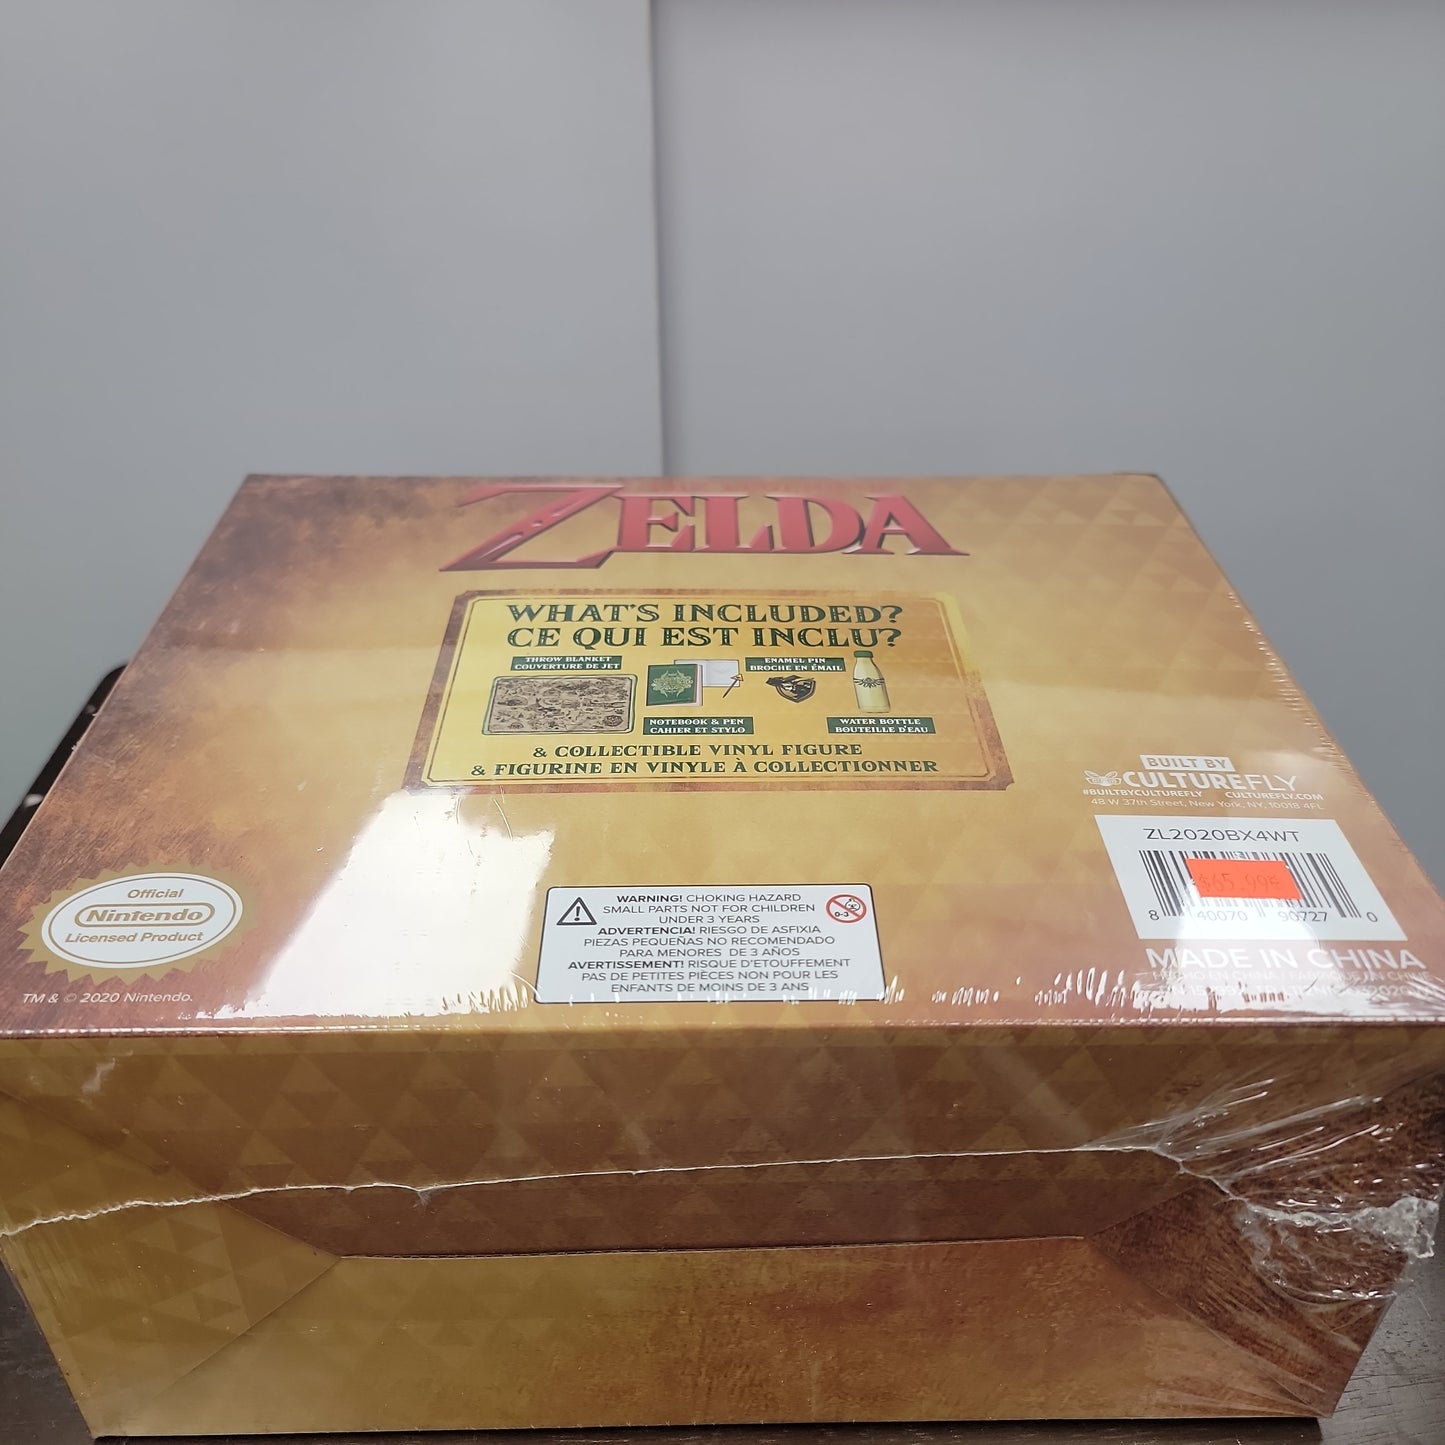 The Legend of Zelda Culturefly Box